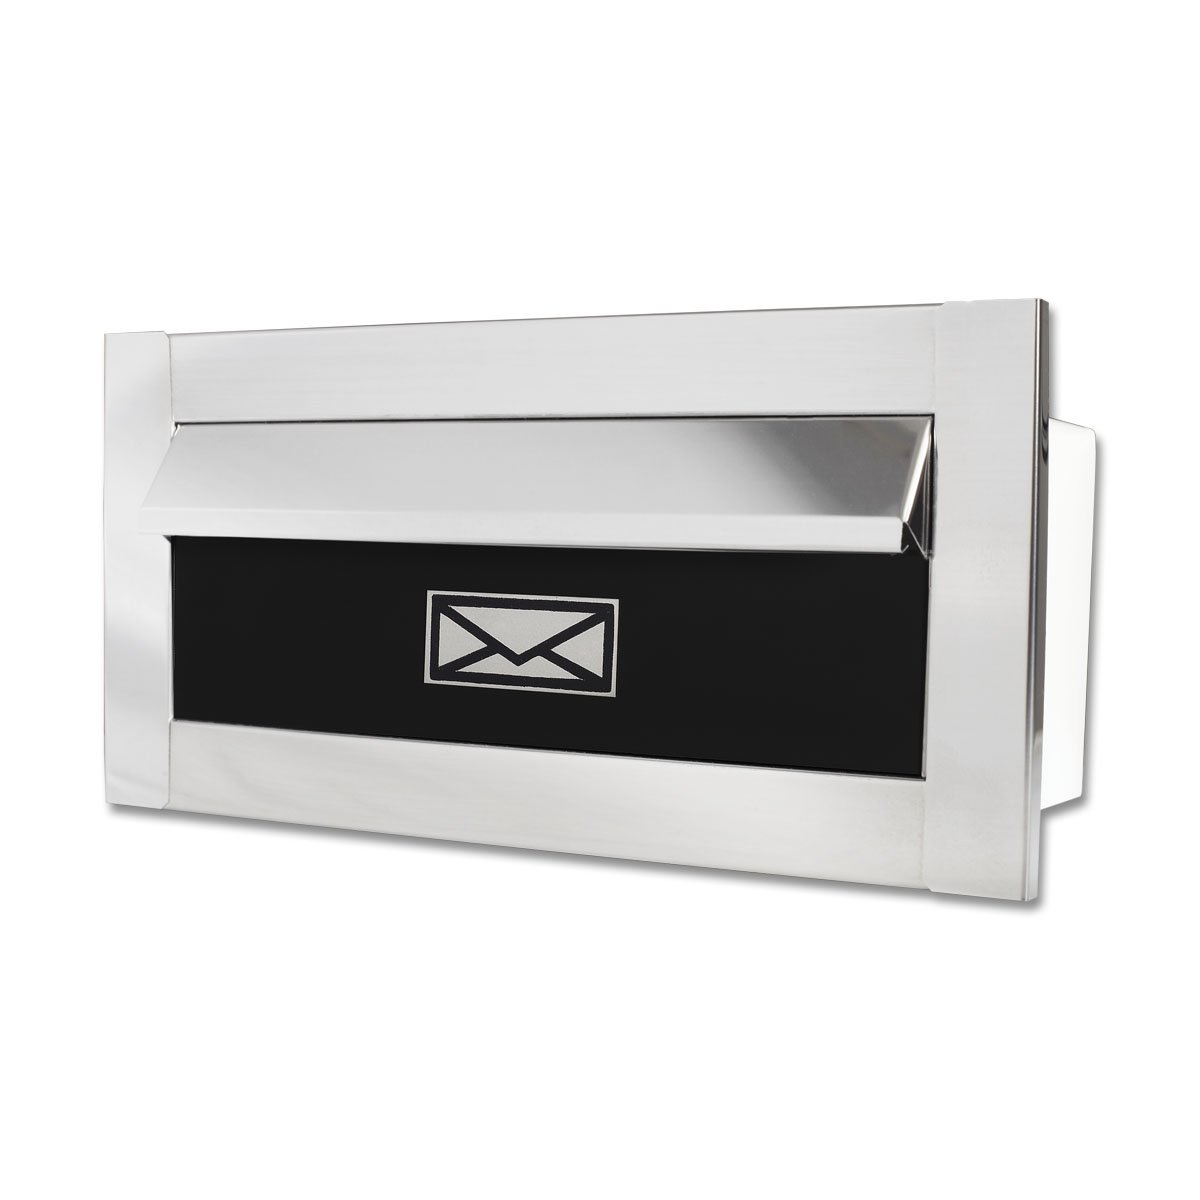 Caixa De Correio carta F Inox polido brilhante espelhado c tarja preta 20 cm profundidade - 1